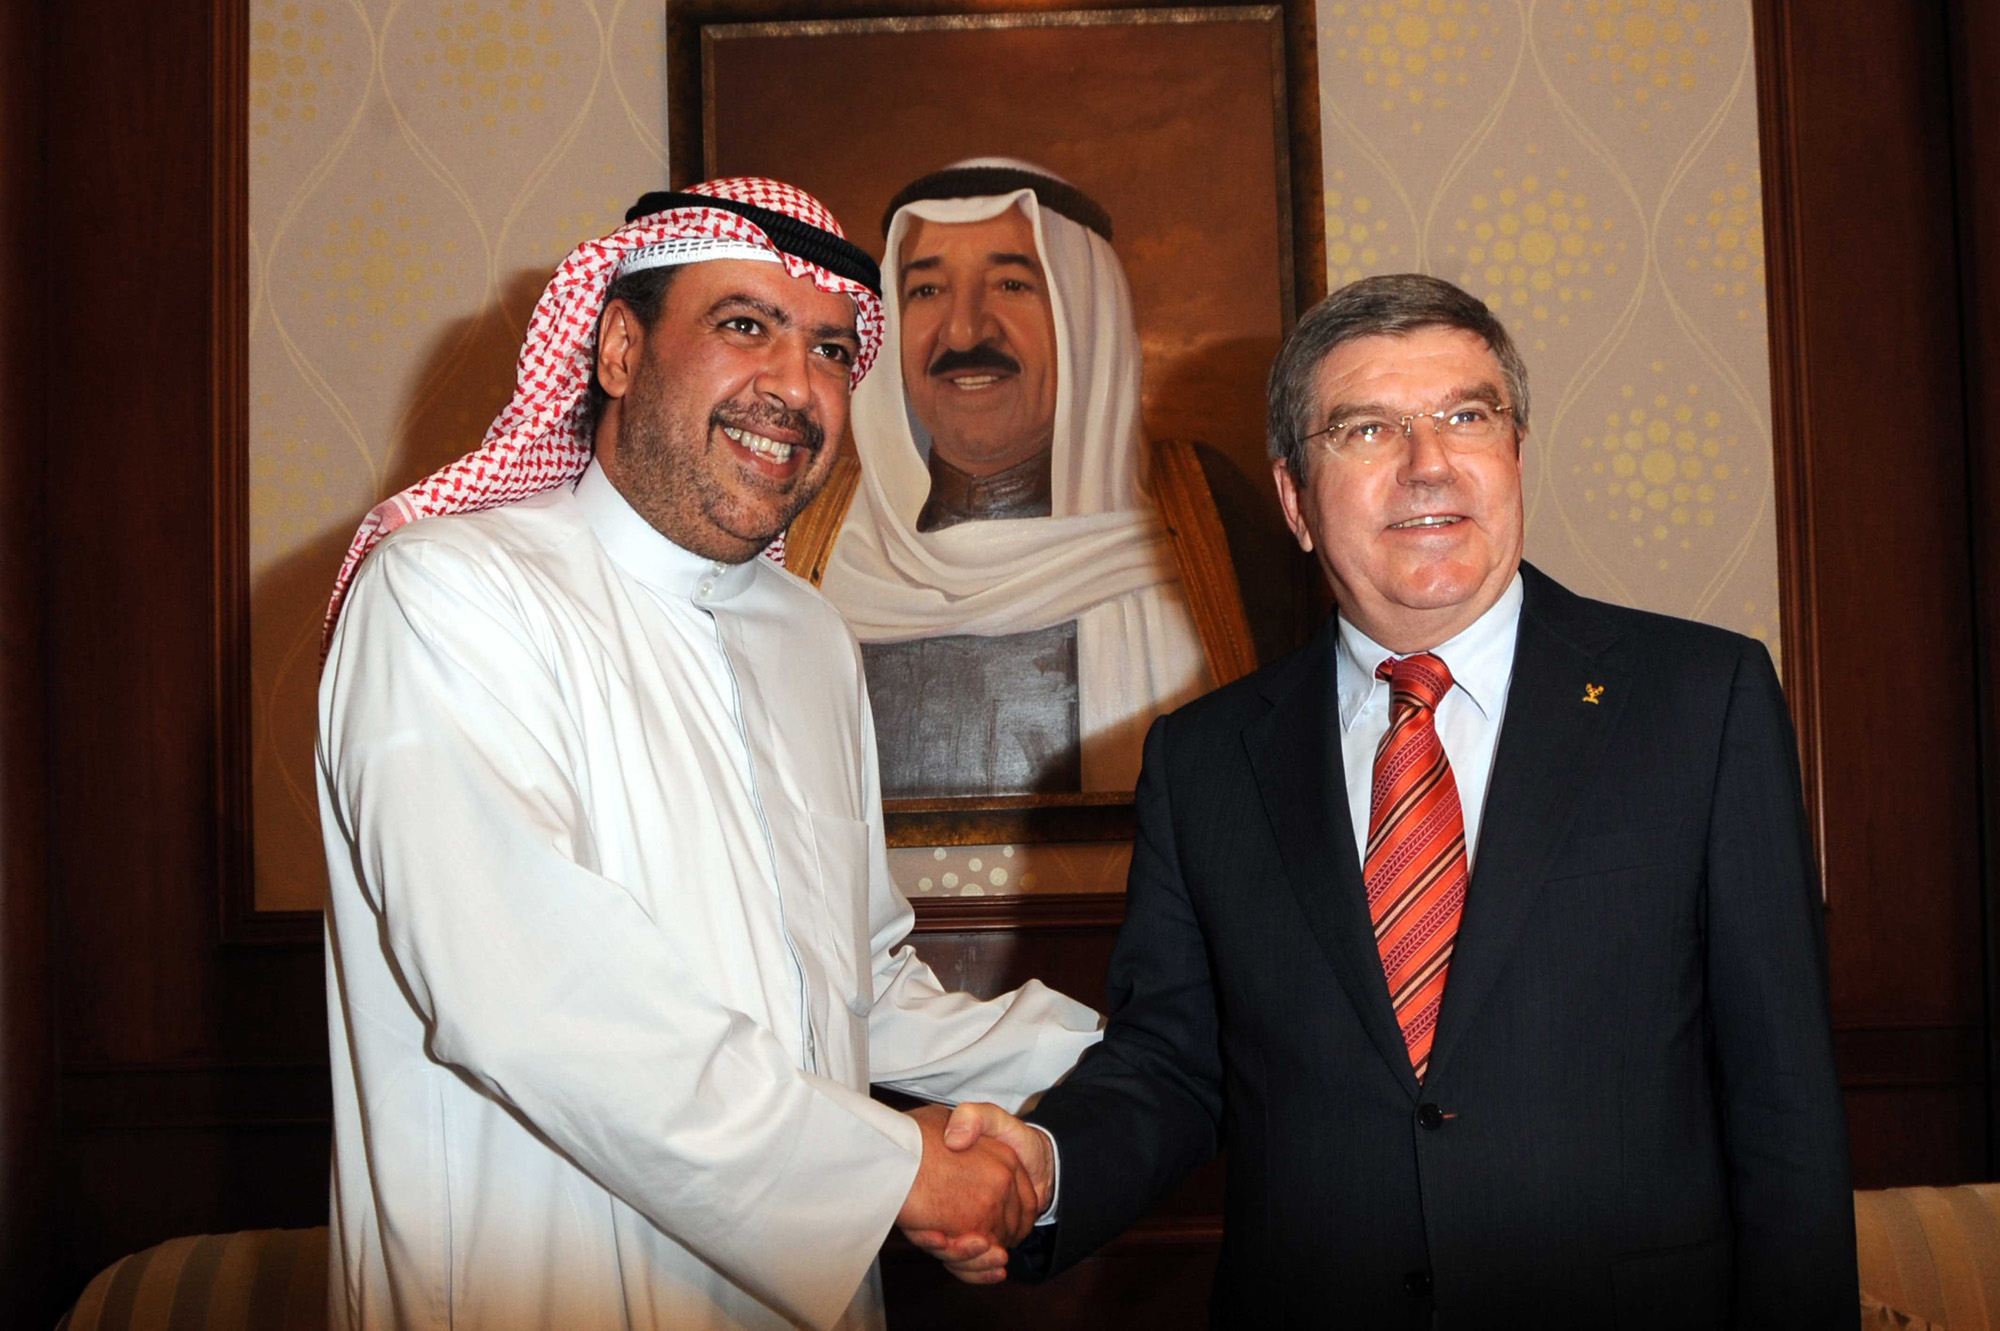 International Olympic Committee President Thomas Bach and ANOC President Sheikh Ahmad Al-Fahad Al-Sabah